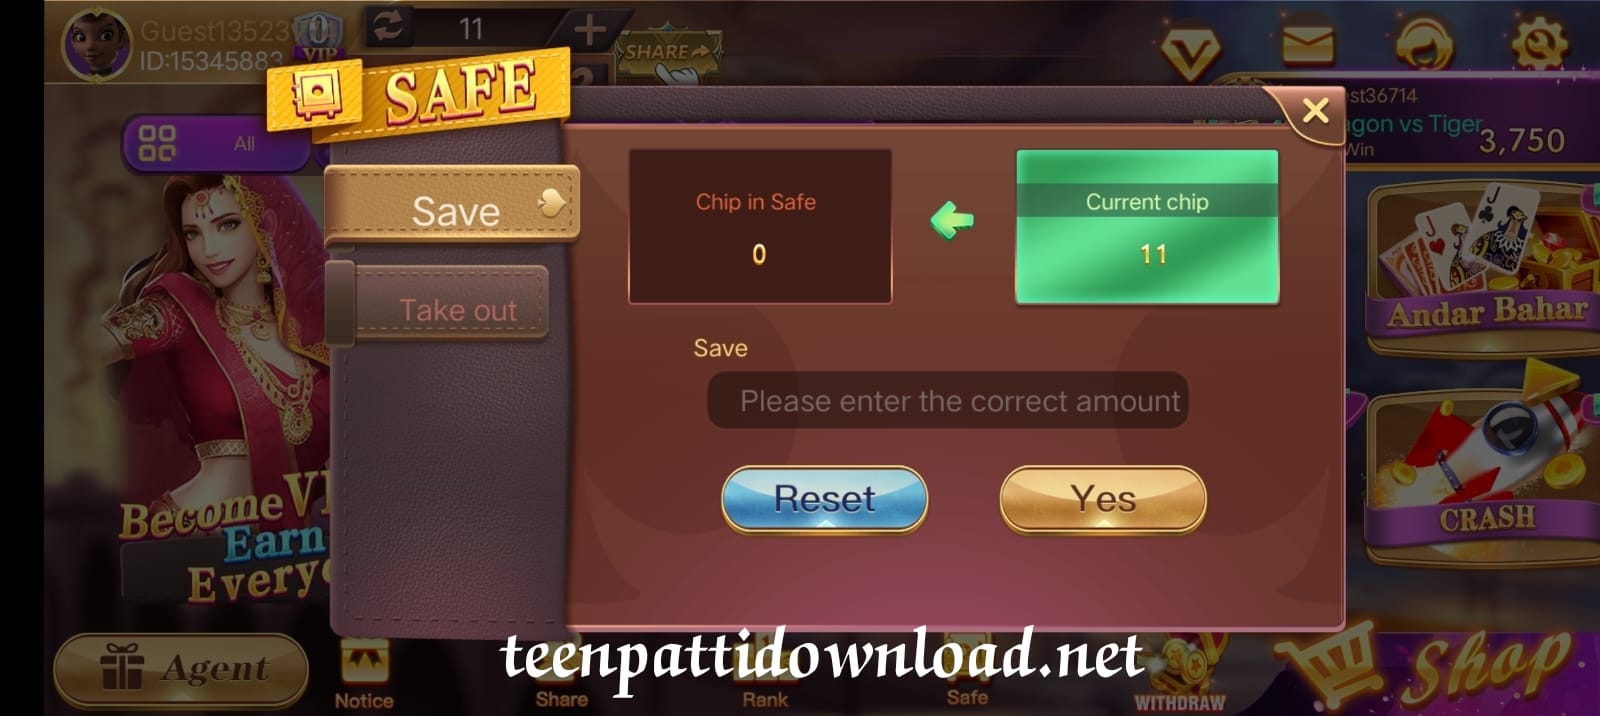 Teen Patti King App Safe Button Program App